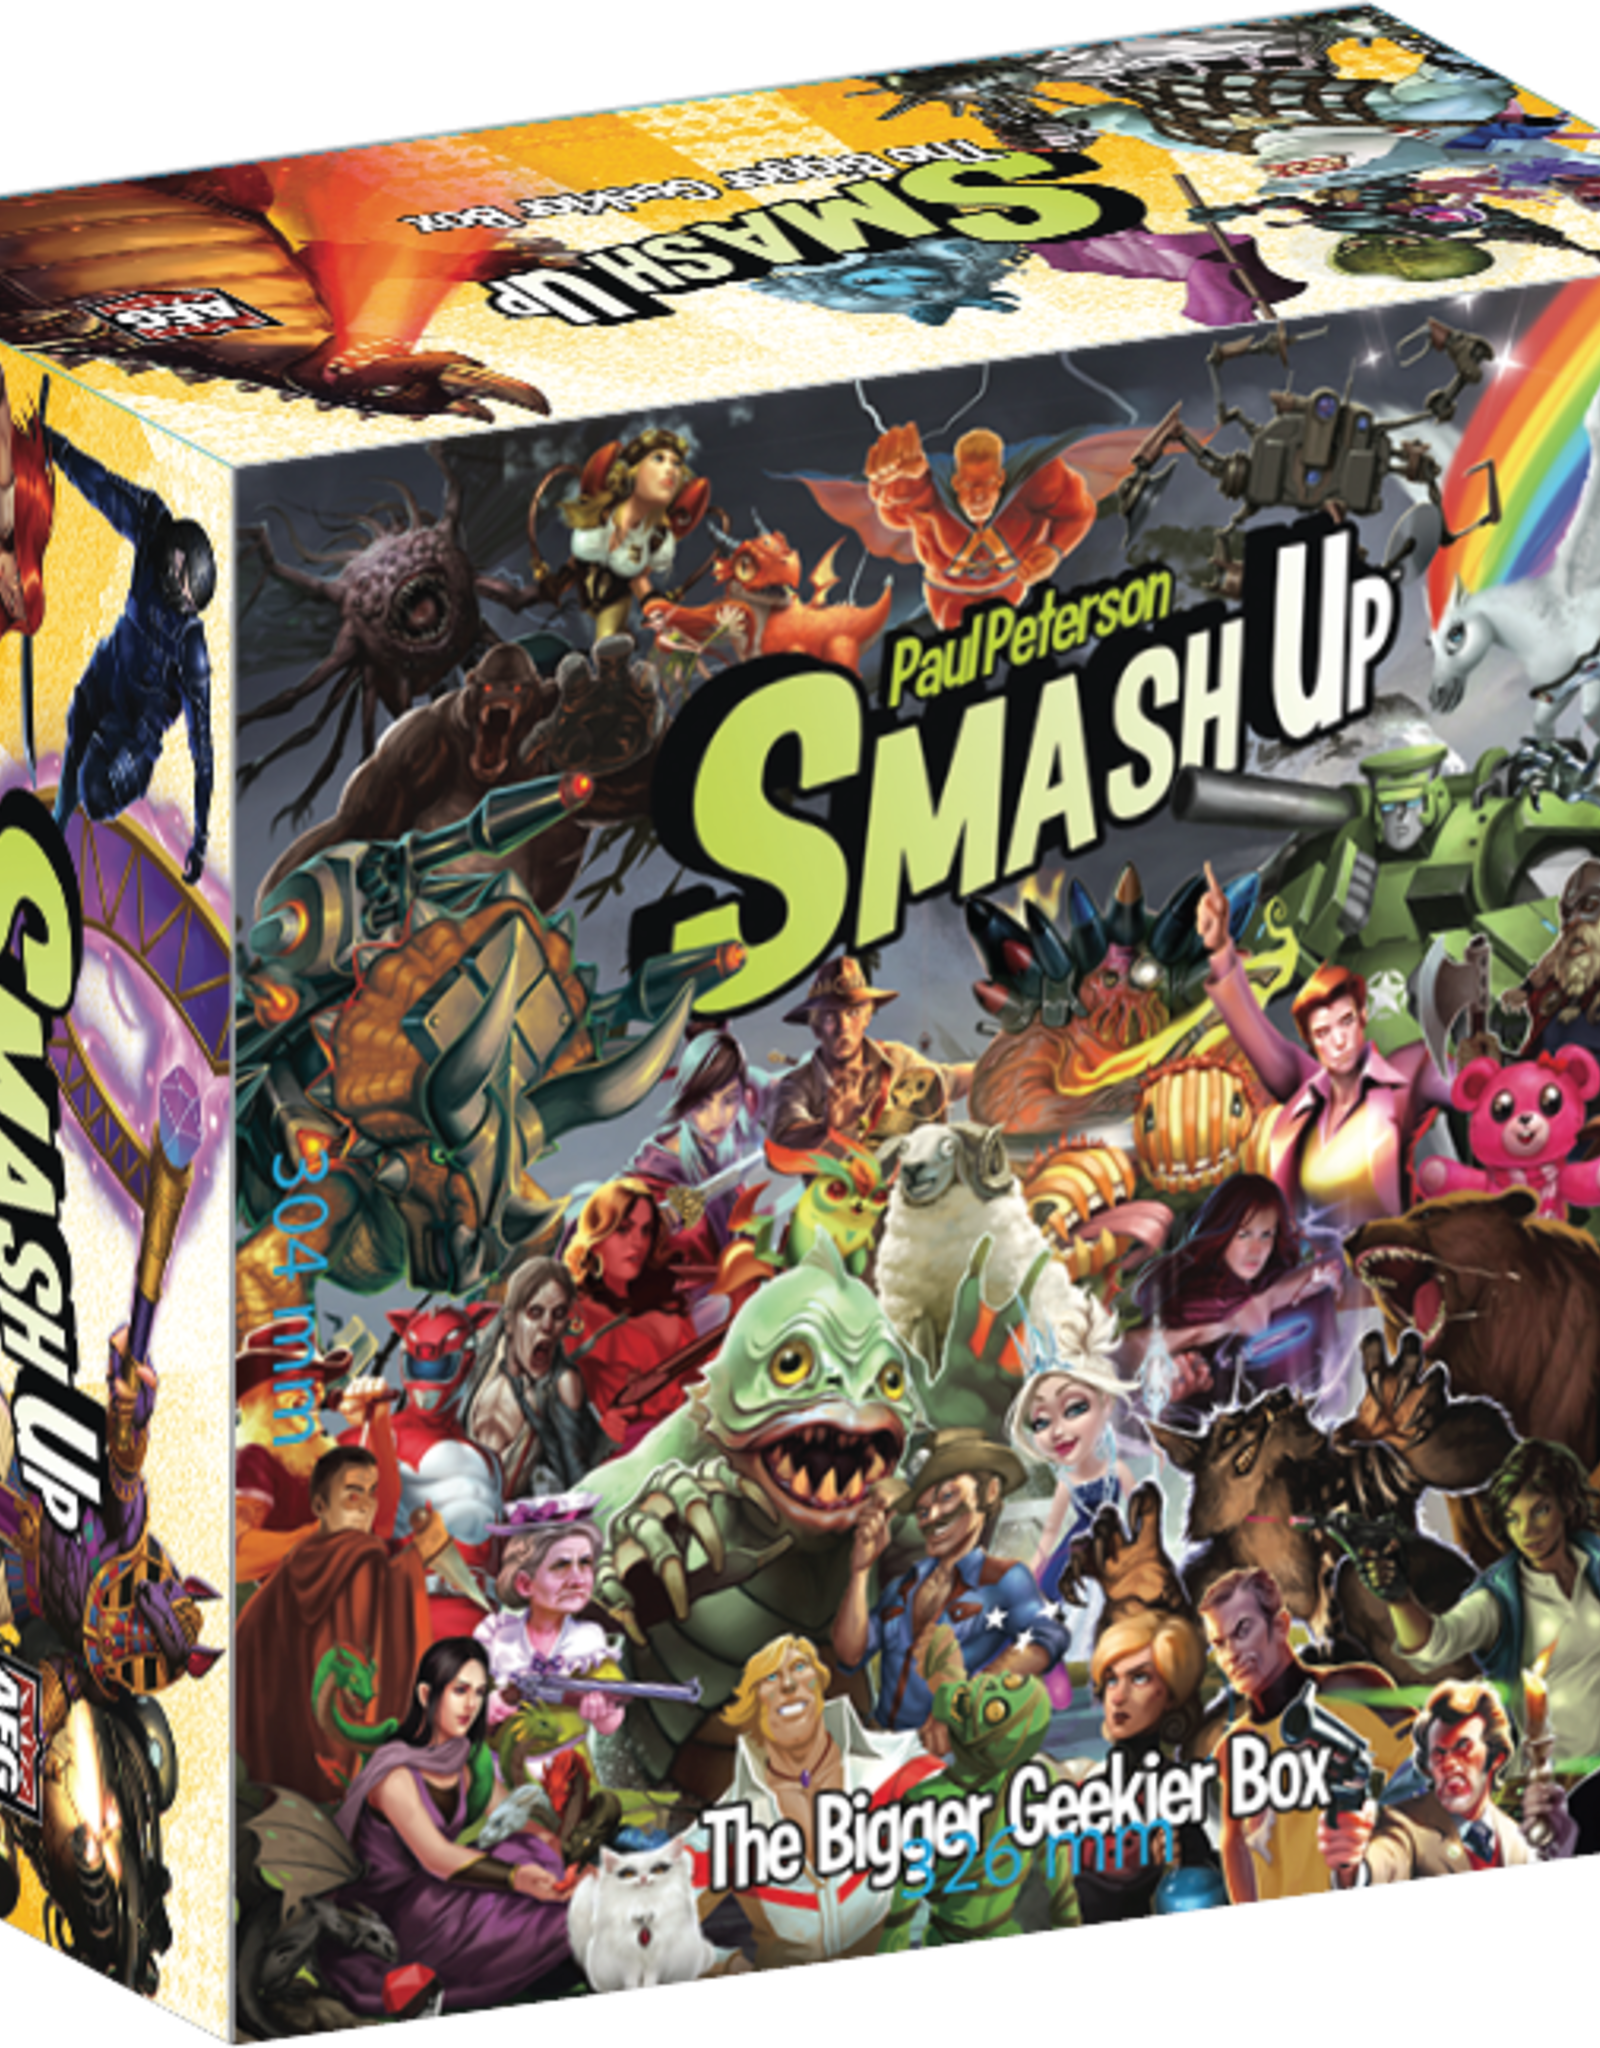 AEG Smash Up: The Bigger Geekier Box